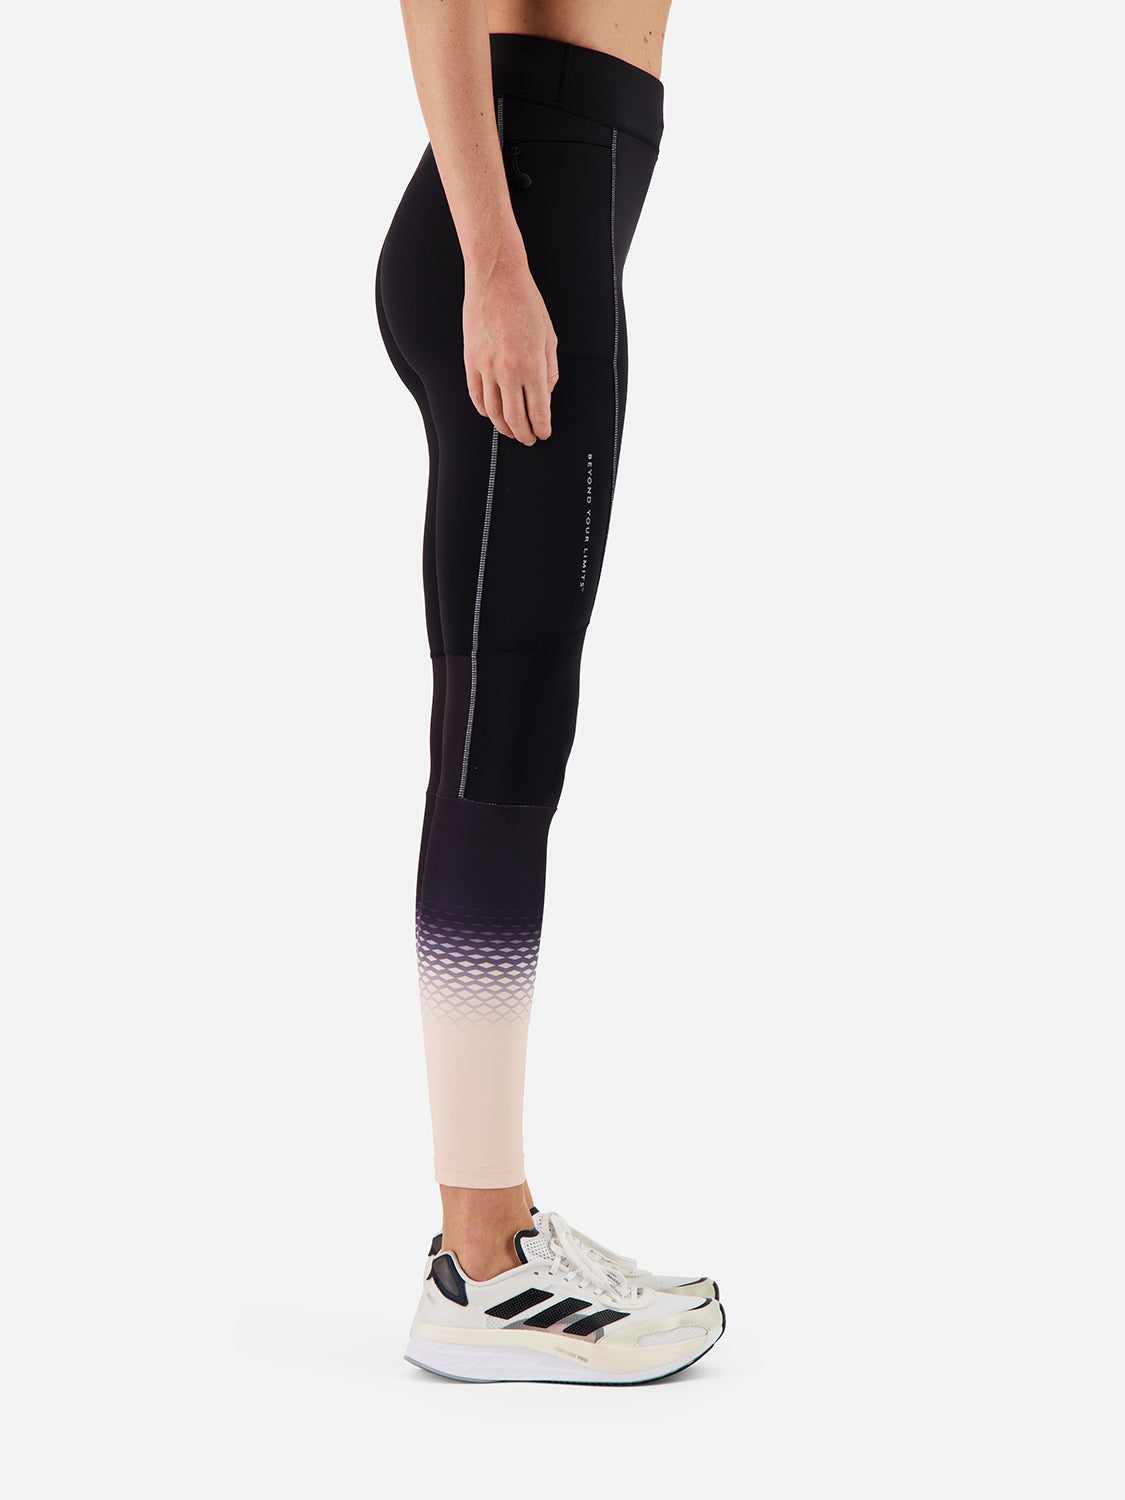 Aimy women's running leggings Black